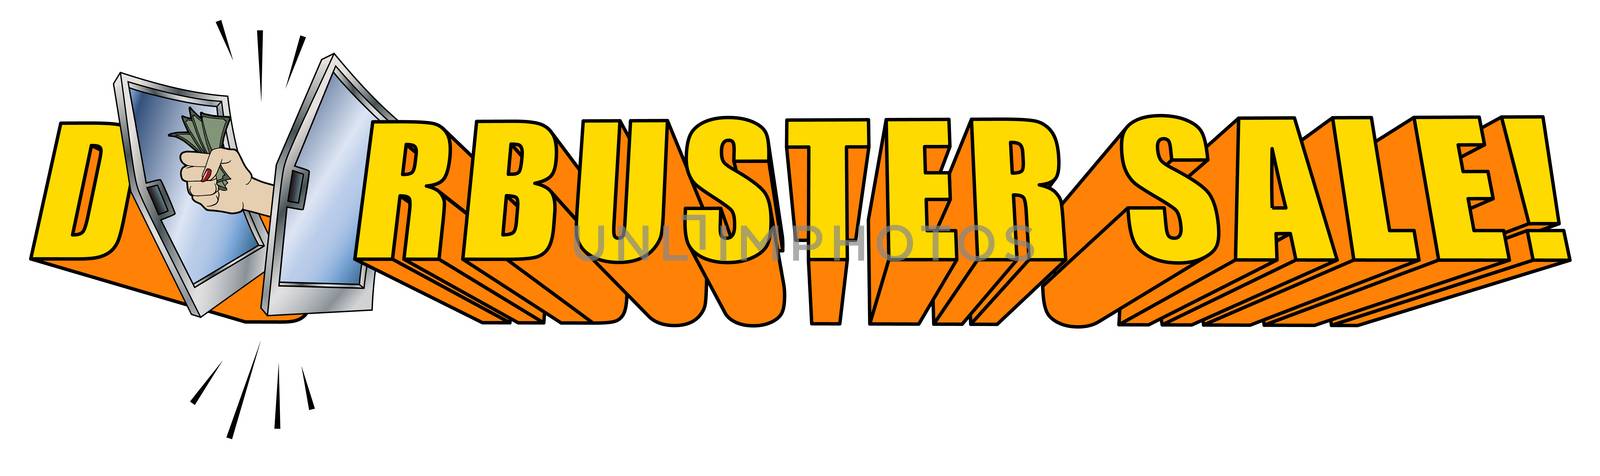 Doorbuster Sale Copy Logo 3D on White Background by illstudio